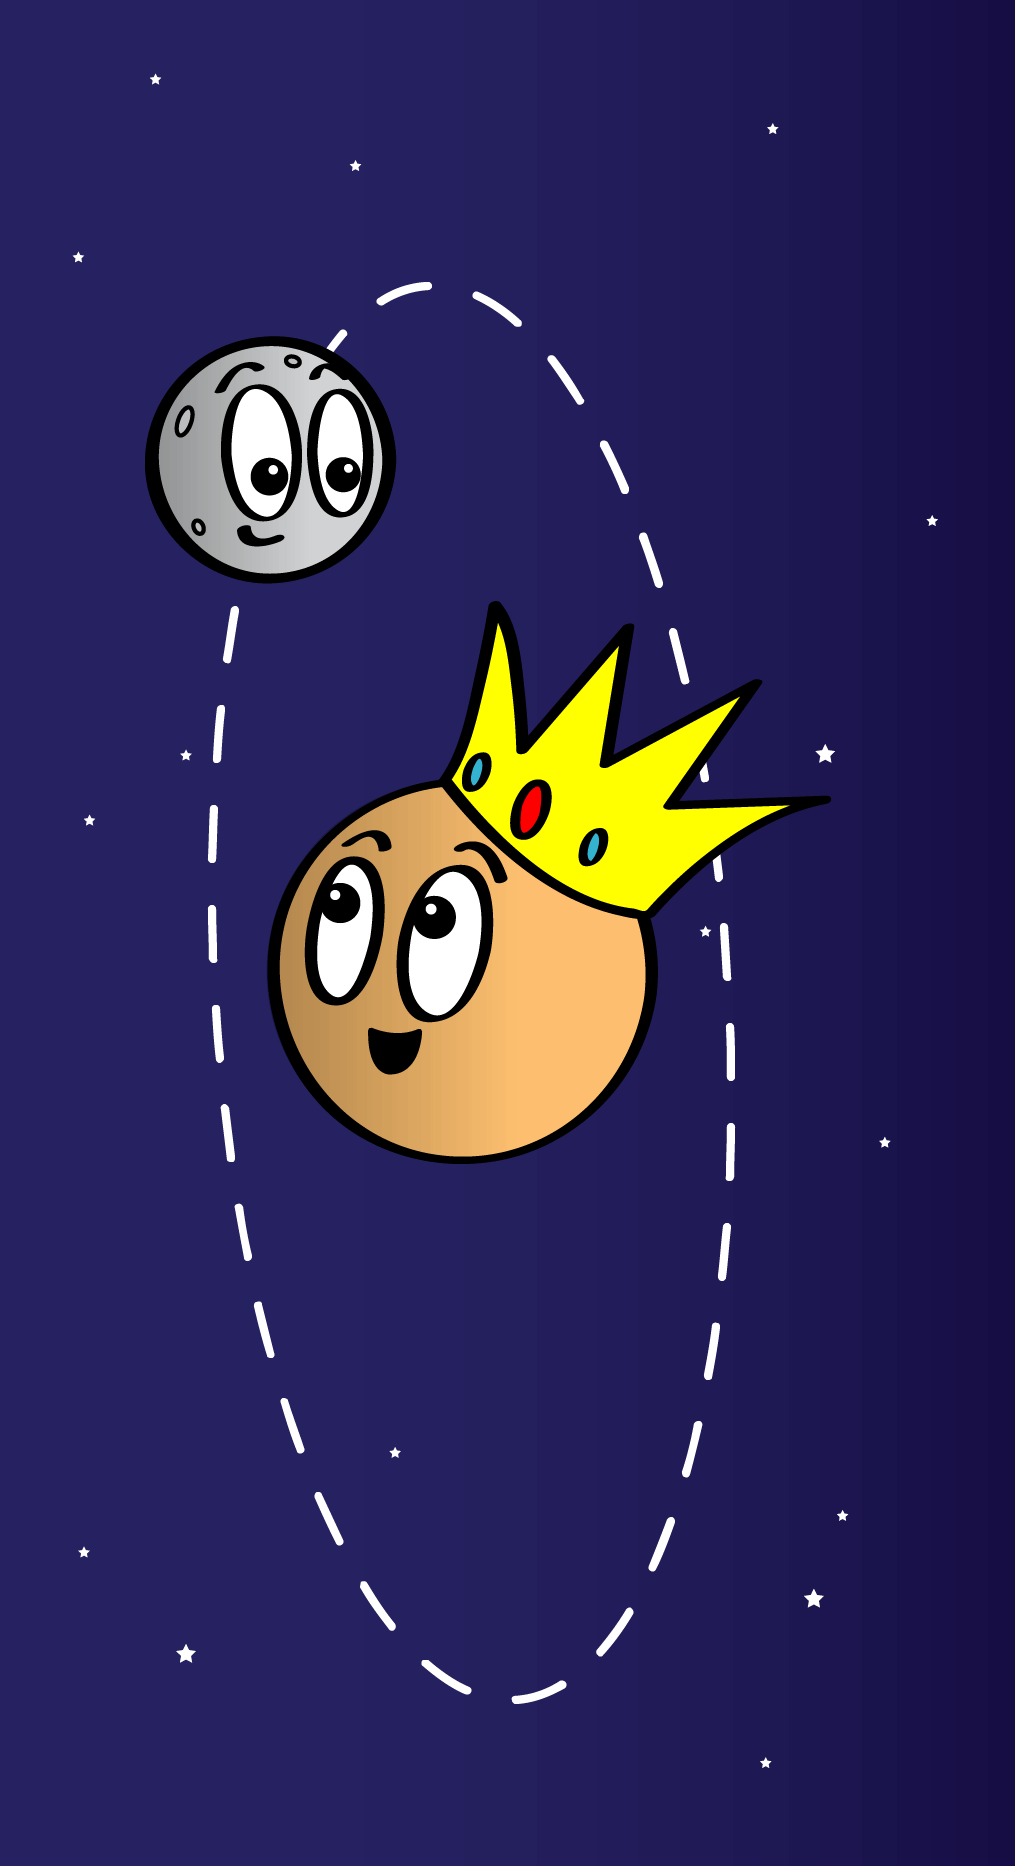 Pluto, King of the Ice Dwarfs